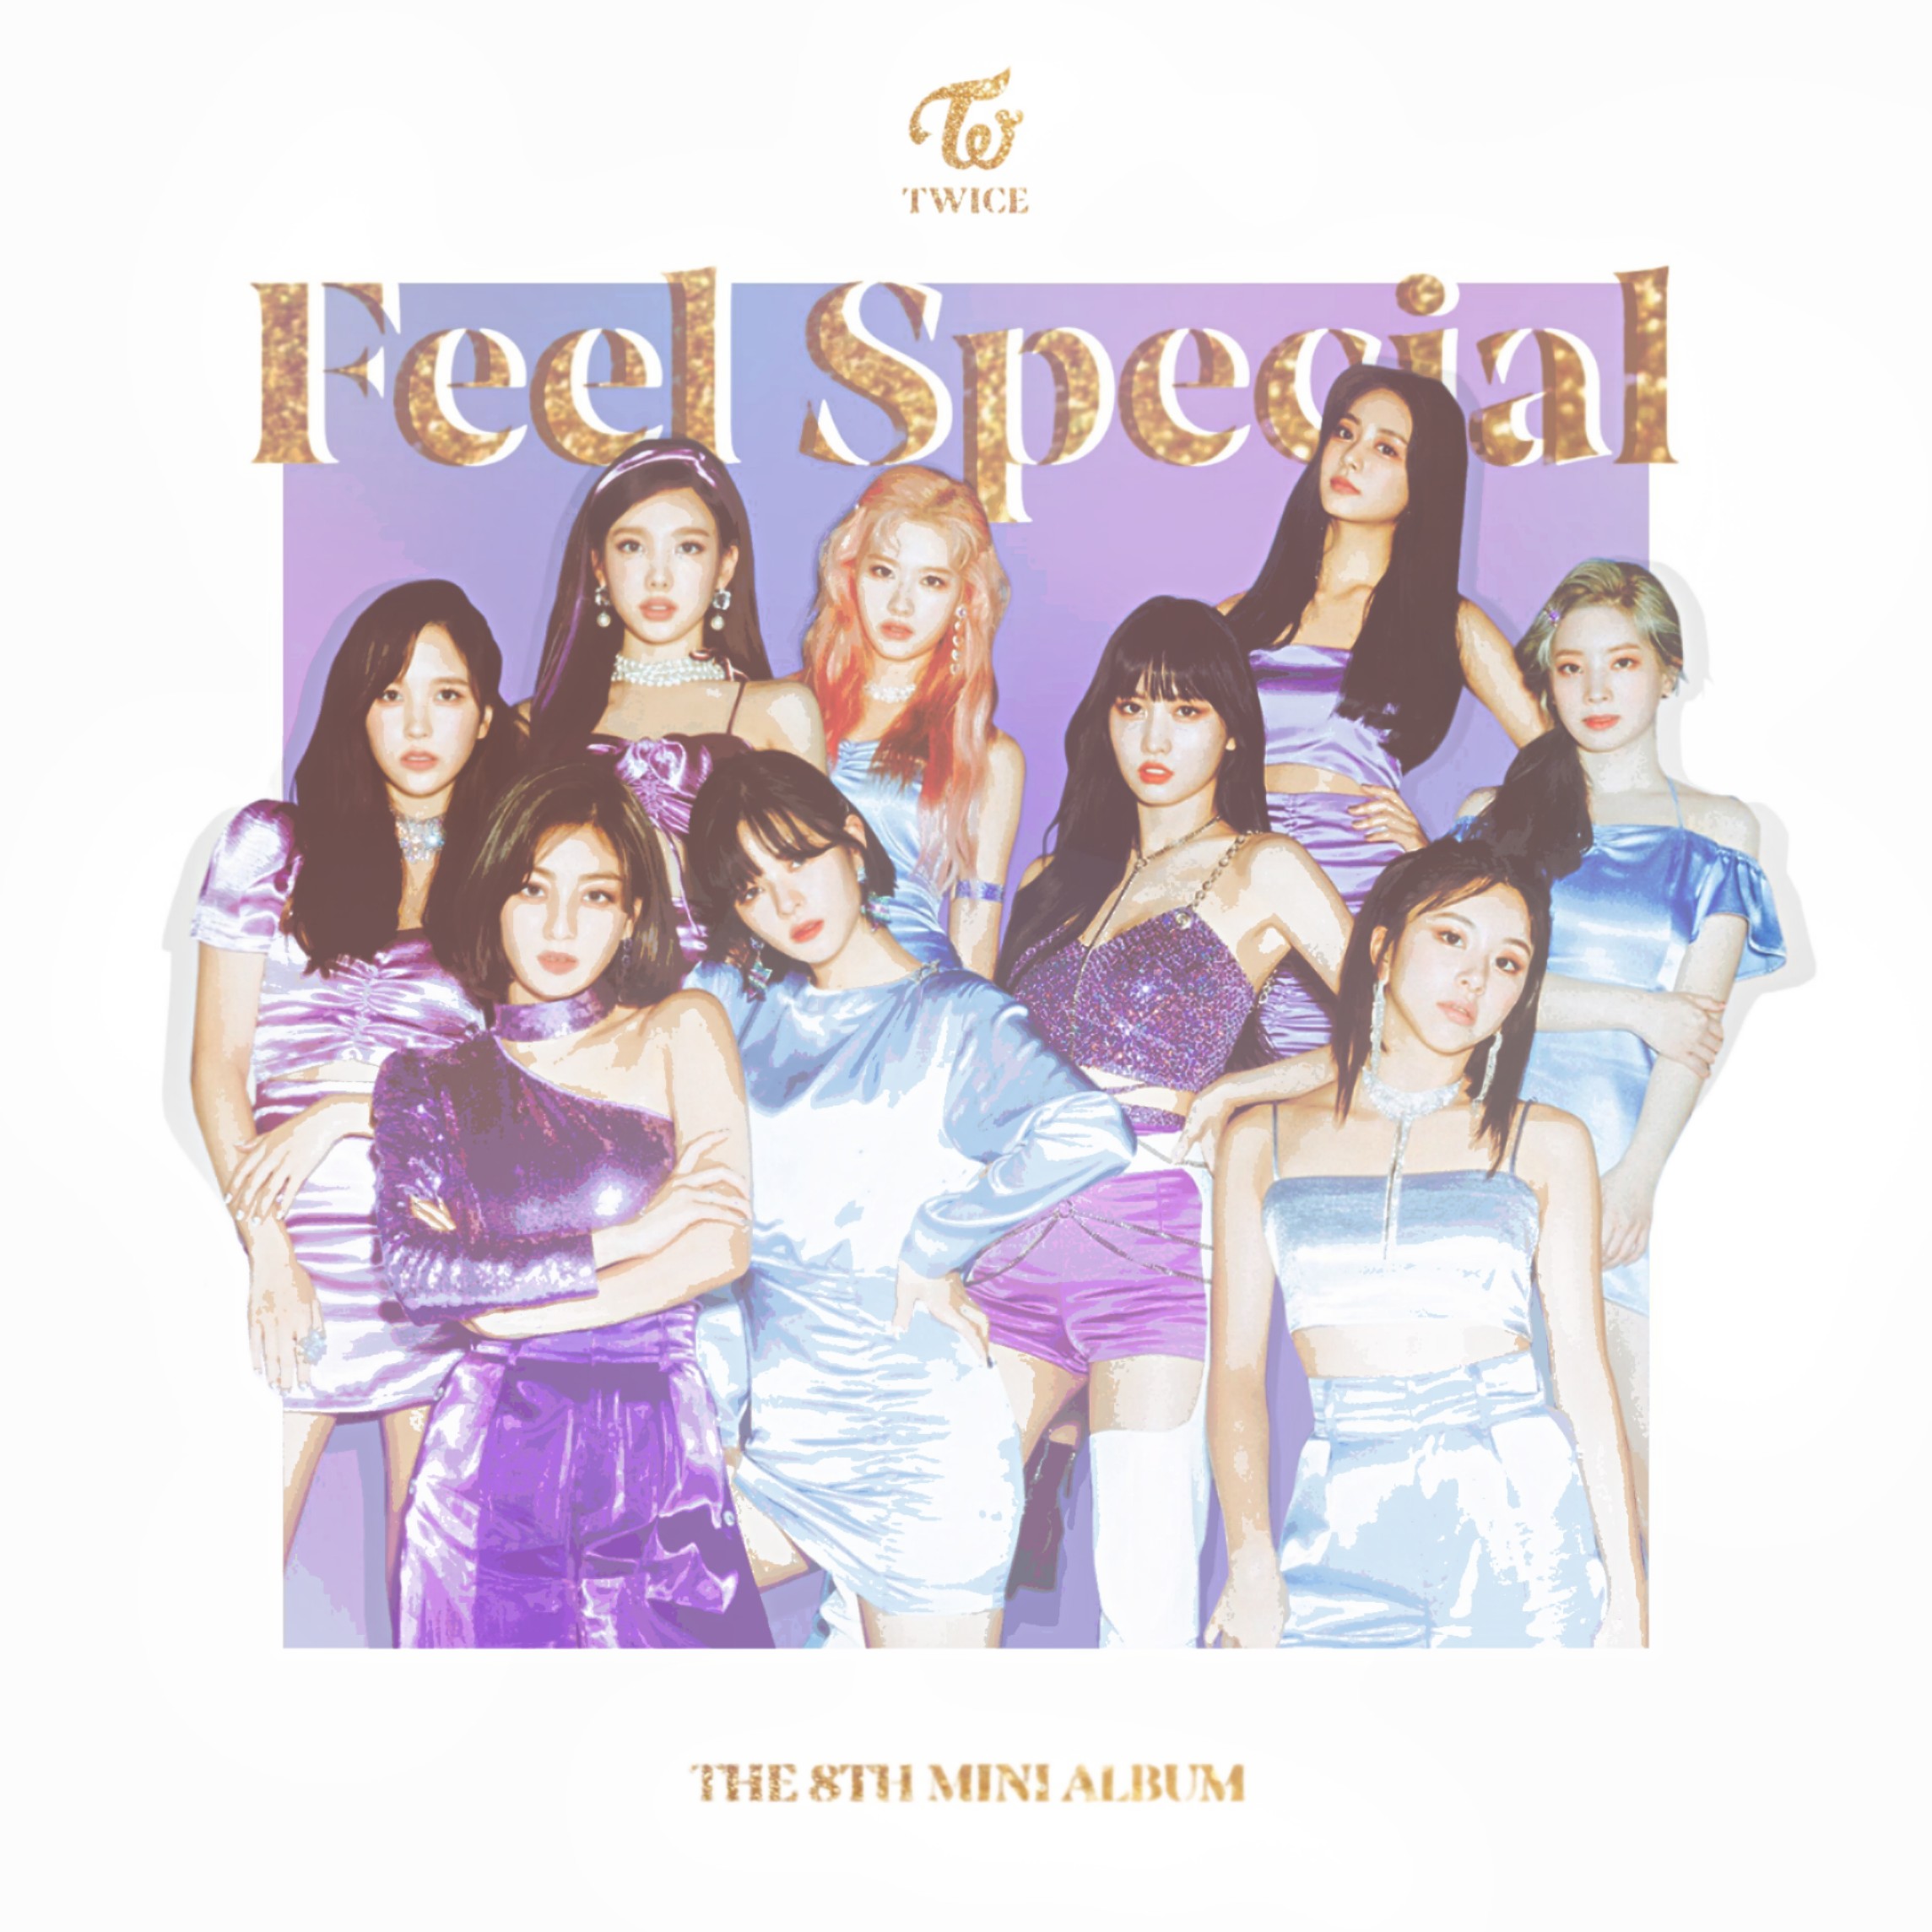 TWICE - Feel Special (8th Mini Album)